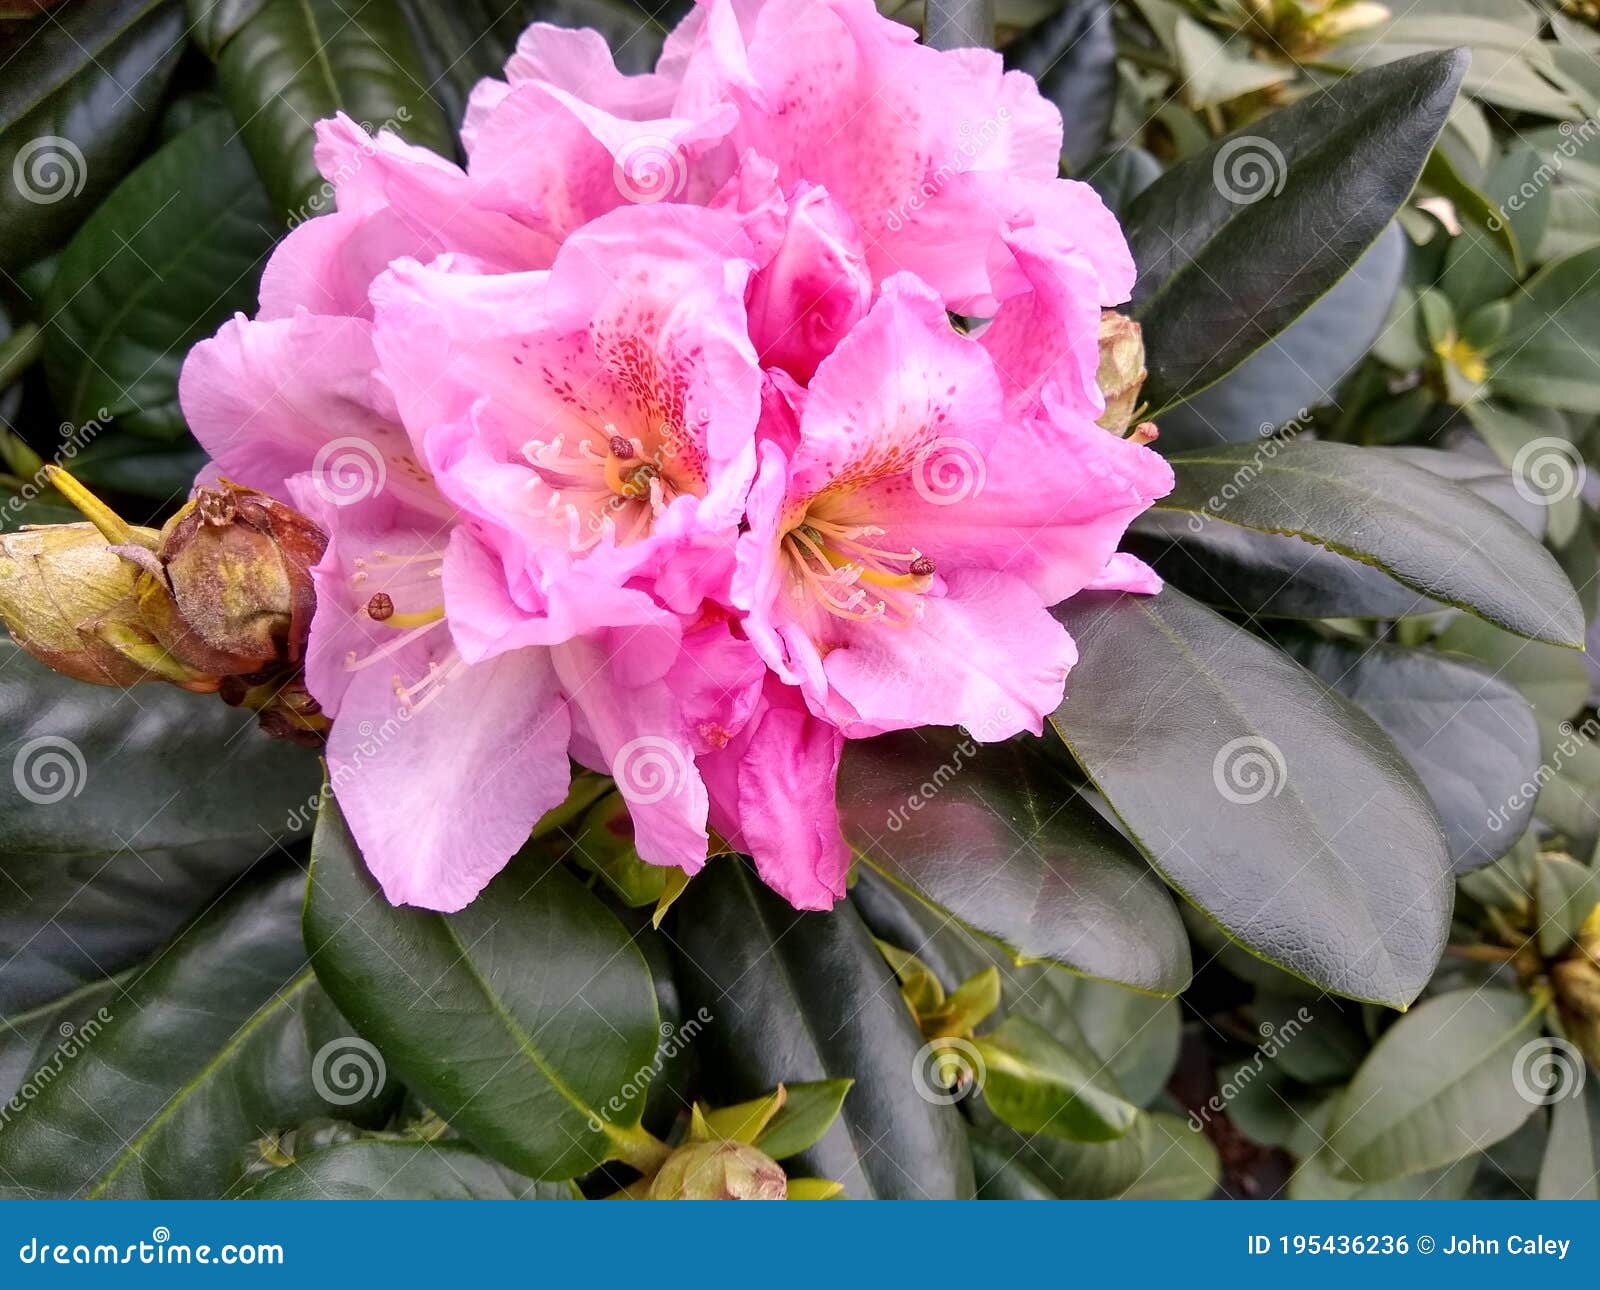 rhododendron 'scintillation'